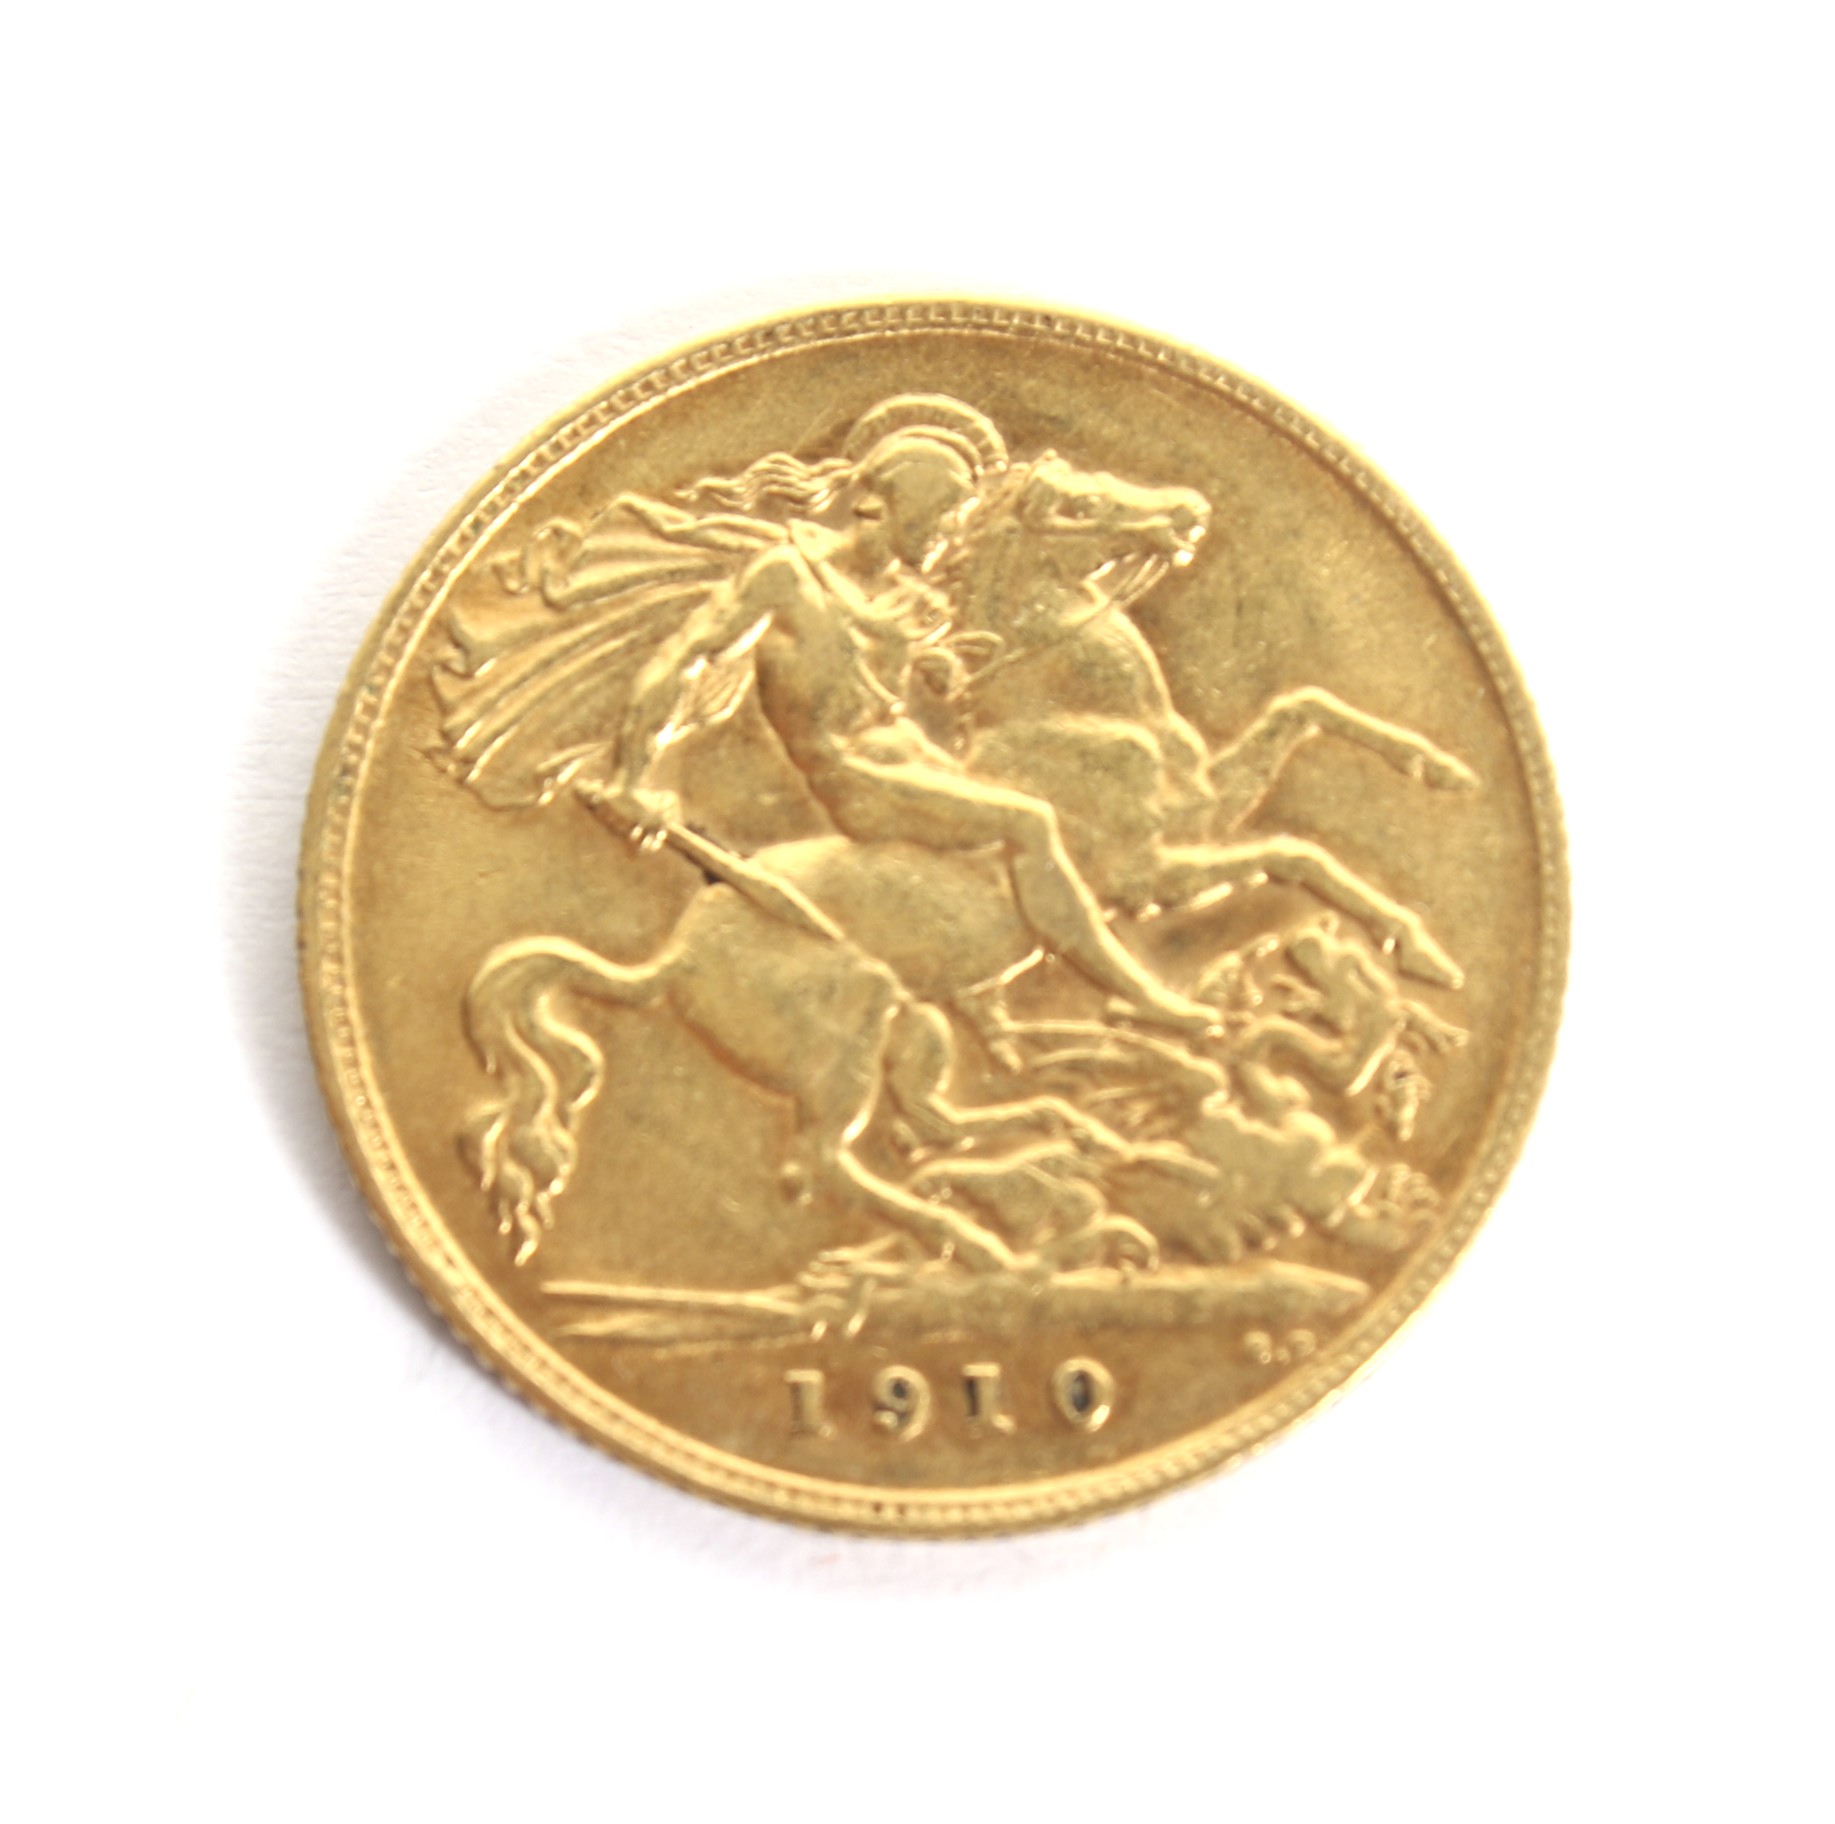 A 1910 half Sovereign coin. - Image 2 of 2